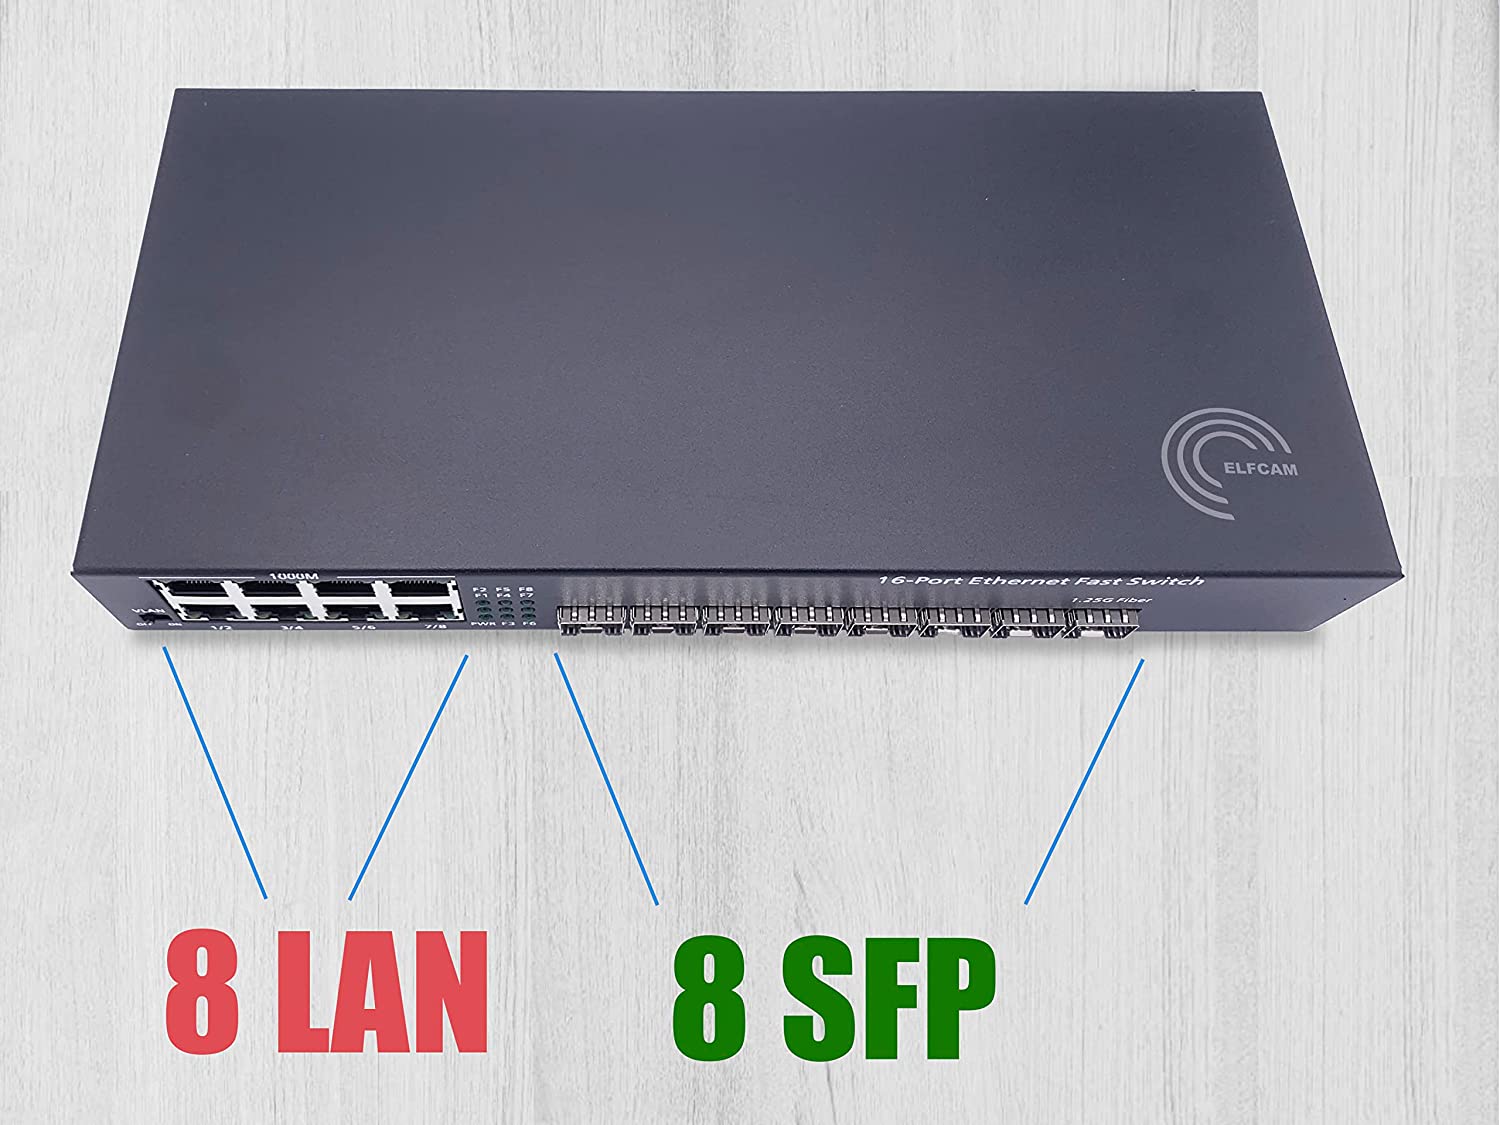 Gigabit Ethernet Switch with 8 SFP Ports: Performance & Flexibility